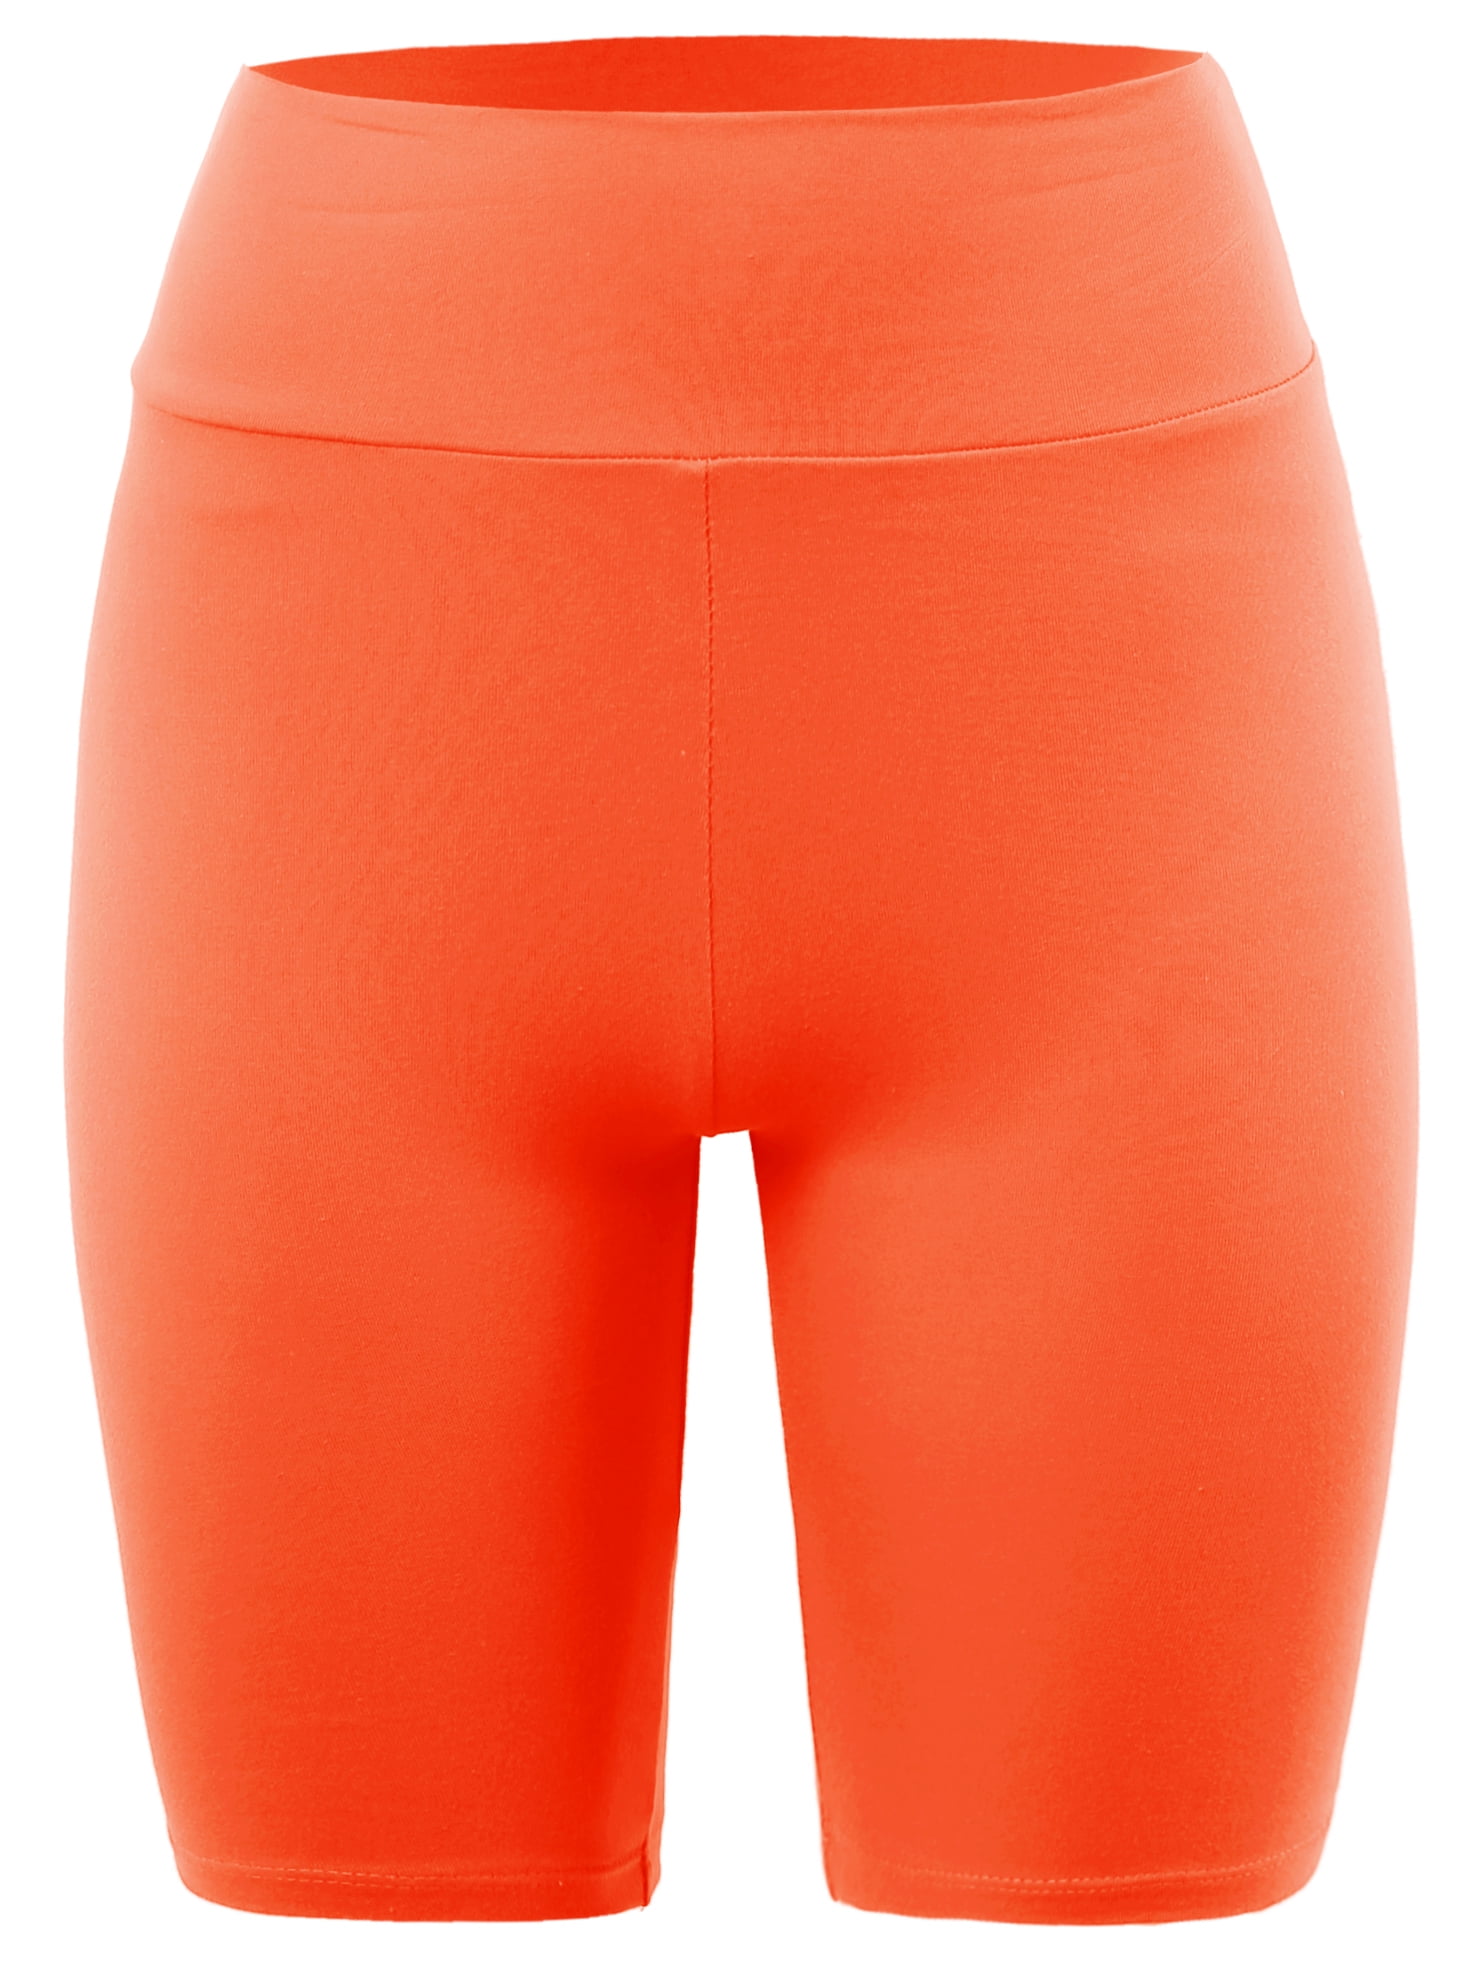 Orange Spandex Shorts 